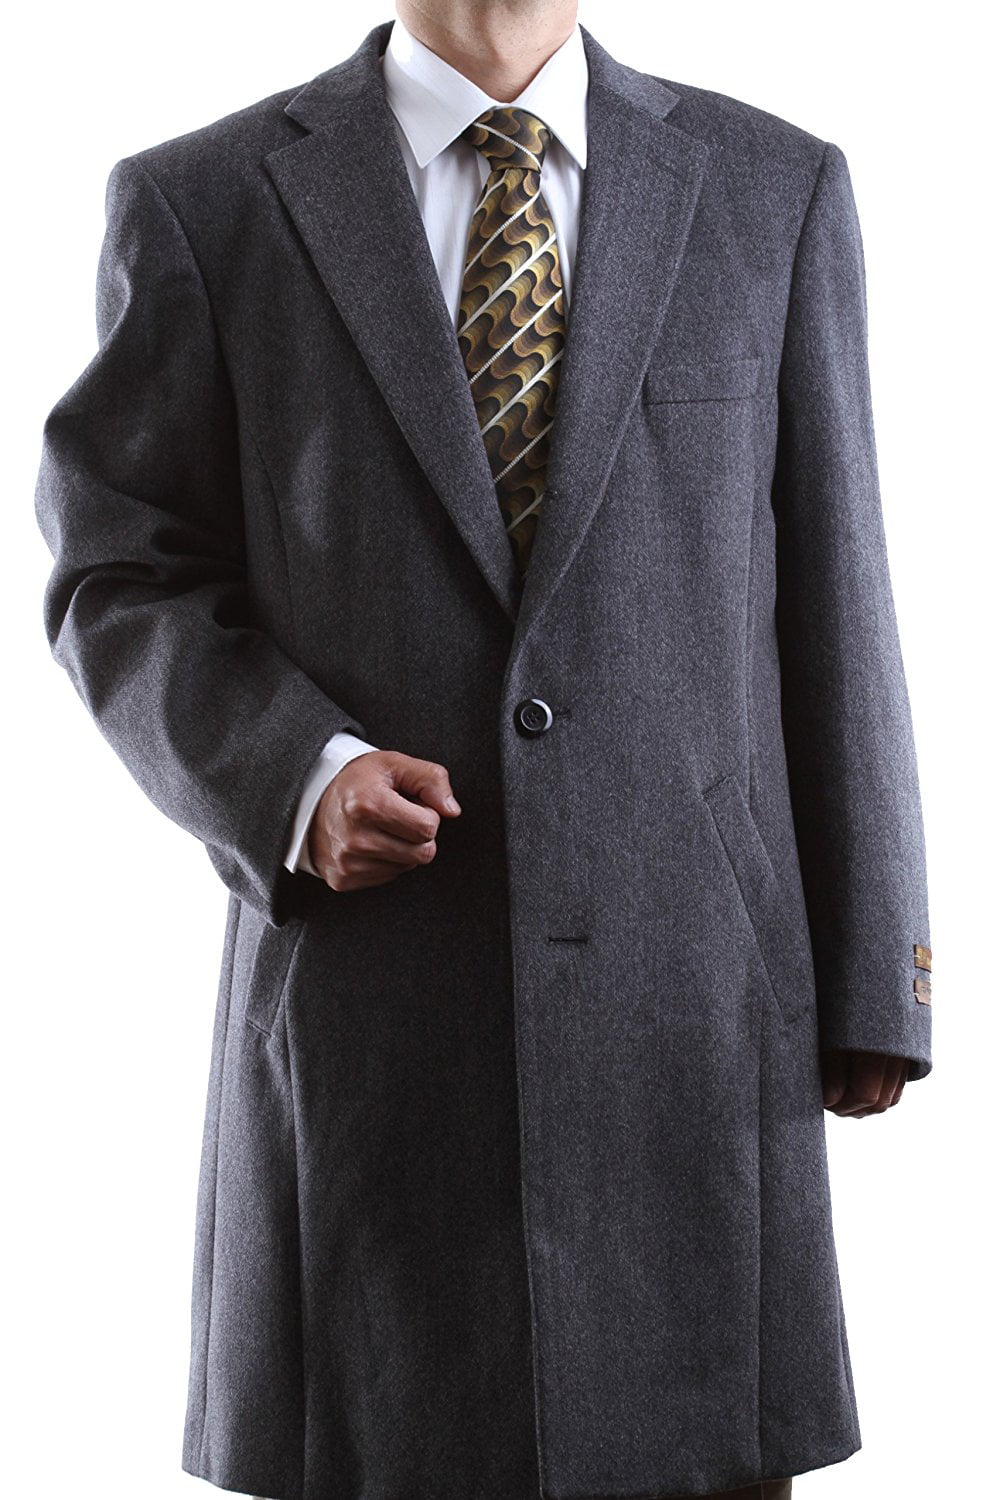 Men's Luxury Wool/Cashmere Three-quarter Length Topcoat - Charcoal -36R ...